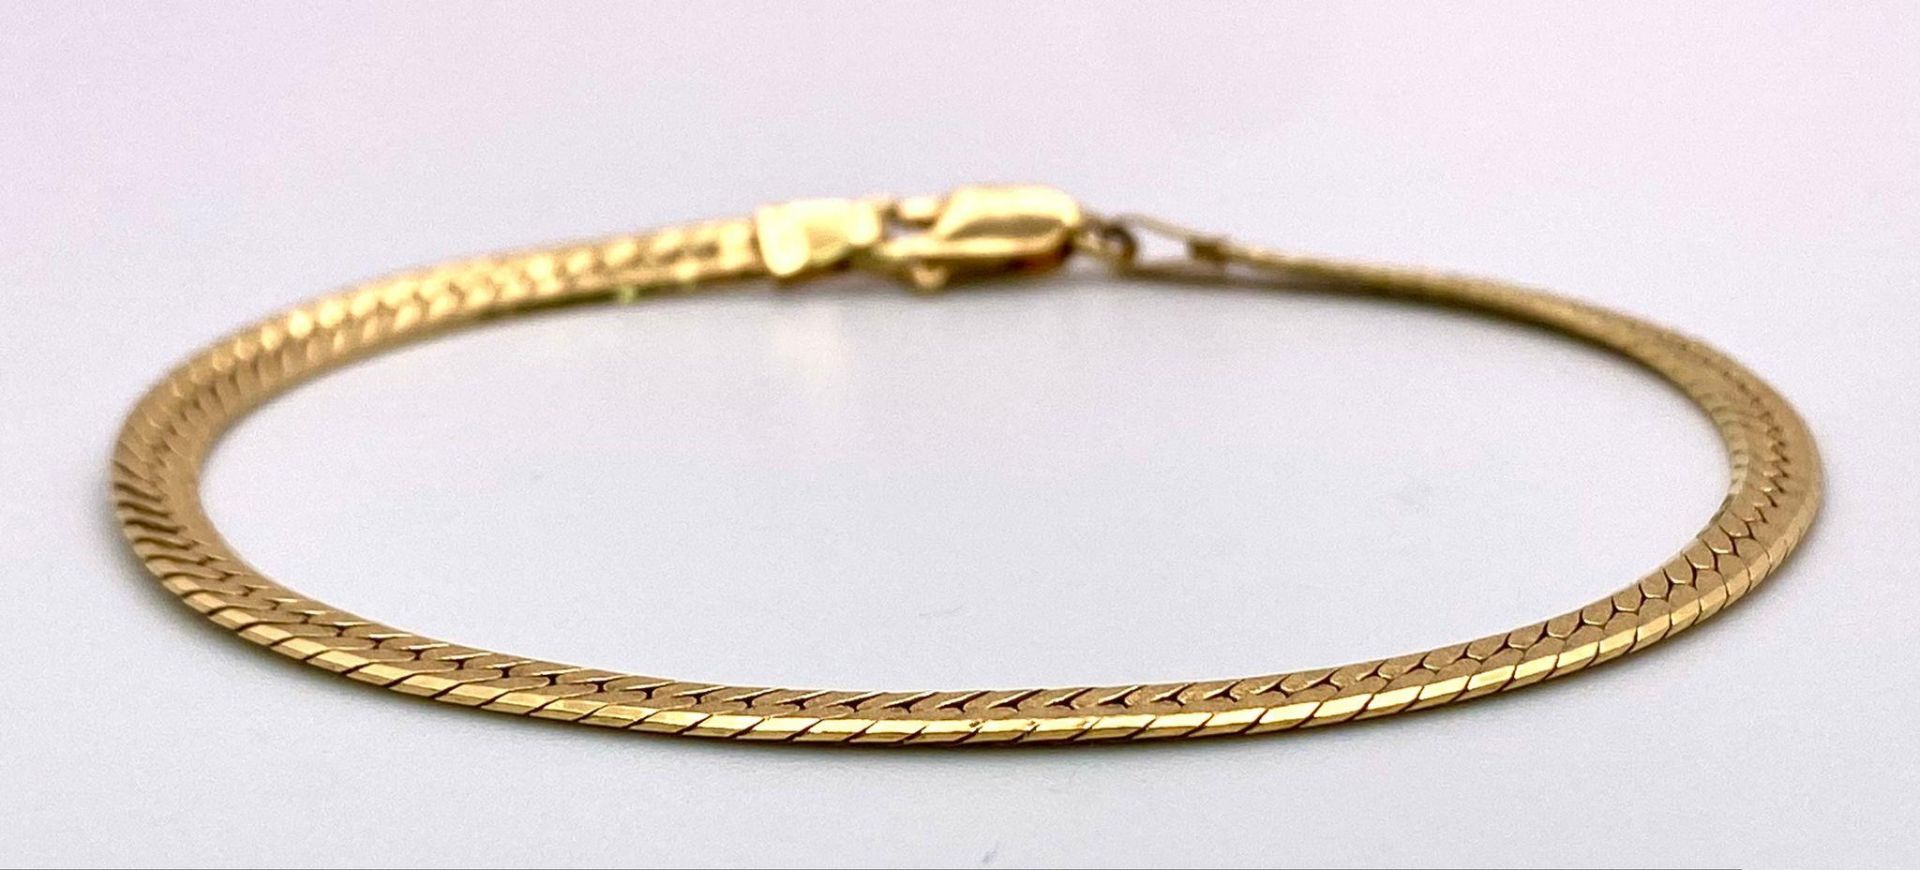 A 10k Yellow Gold Herringbone Bracelet. 17cm. 5g weight.